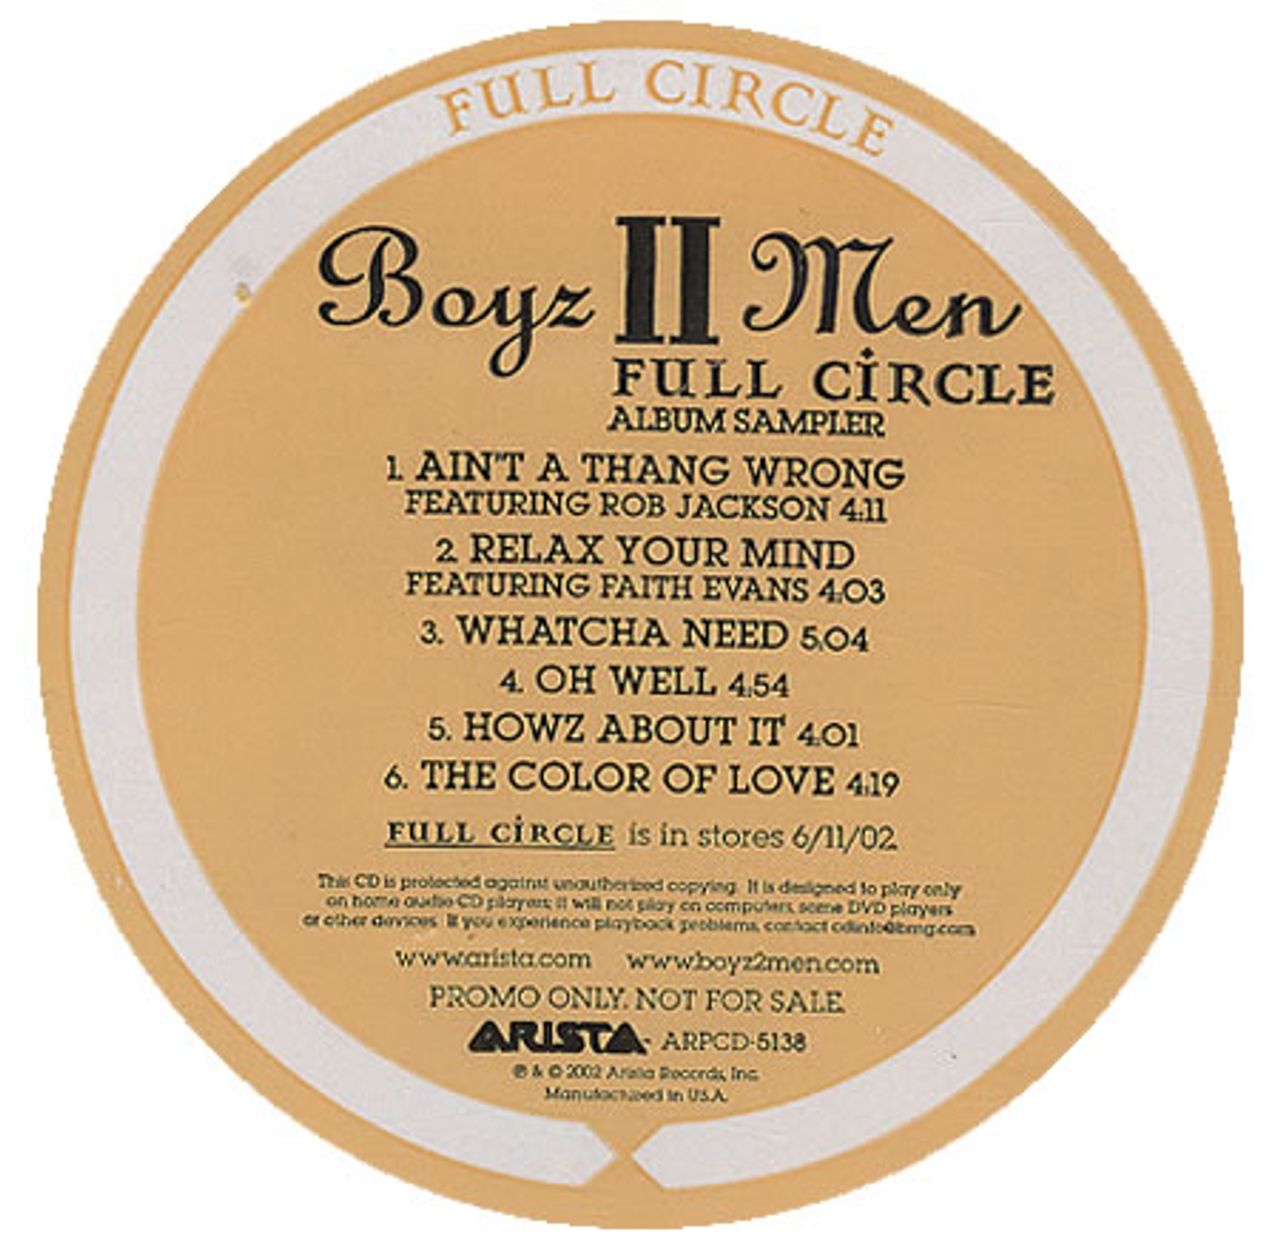 Boyz II Men Full Circle - Album Sampler US Promo CD single